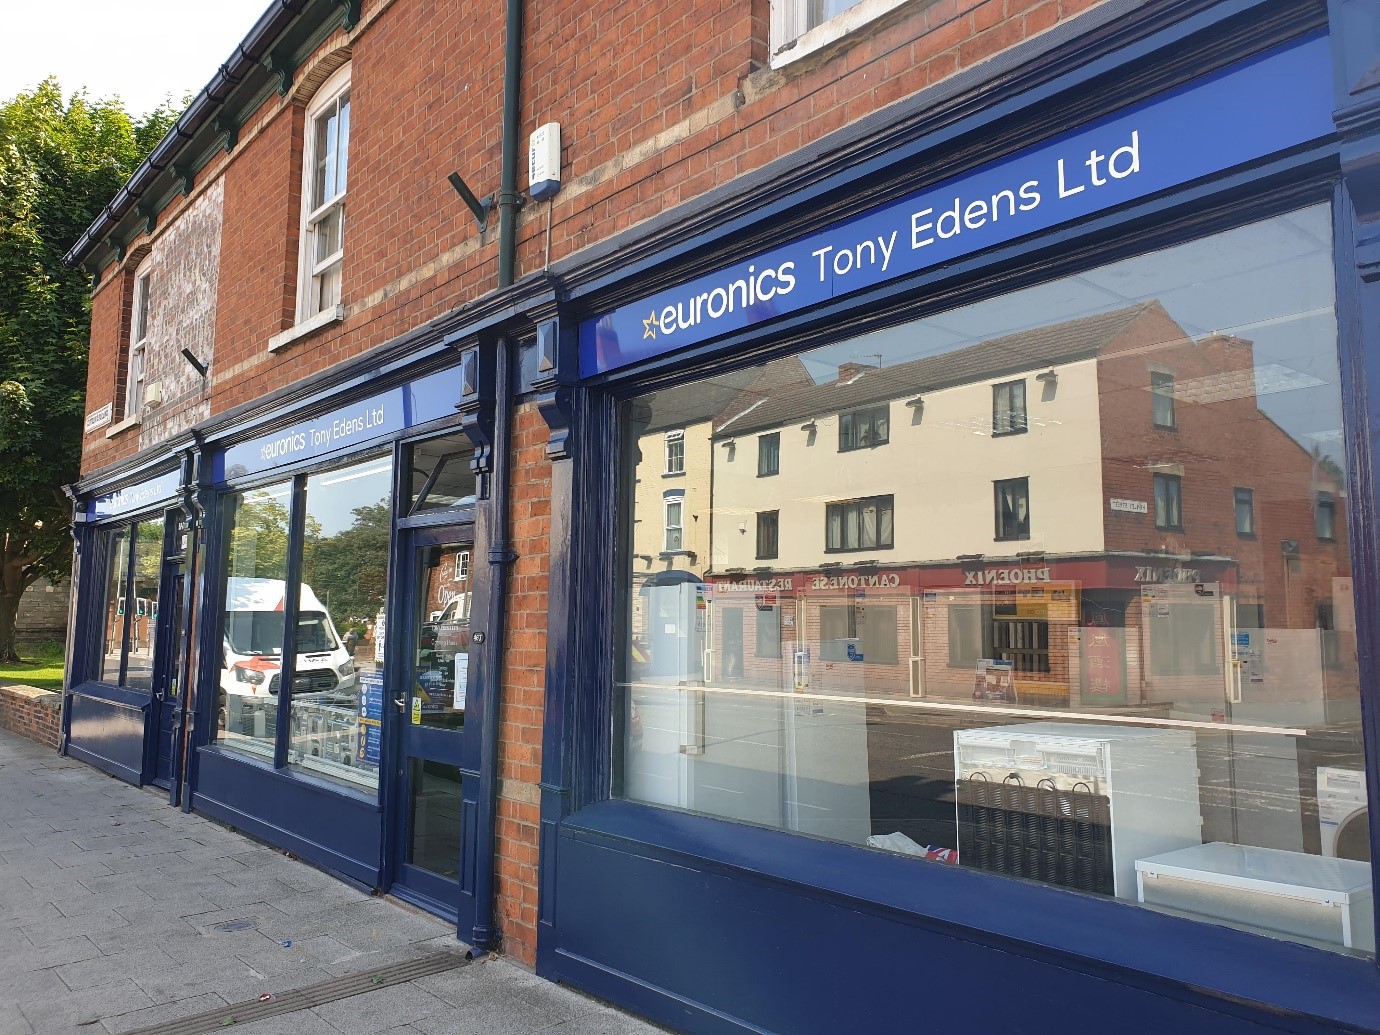 Tony Edens Ltd